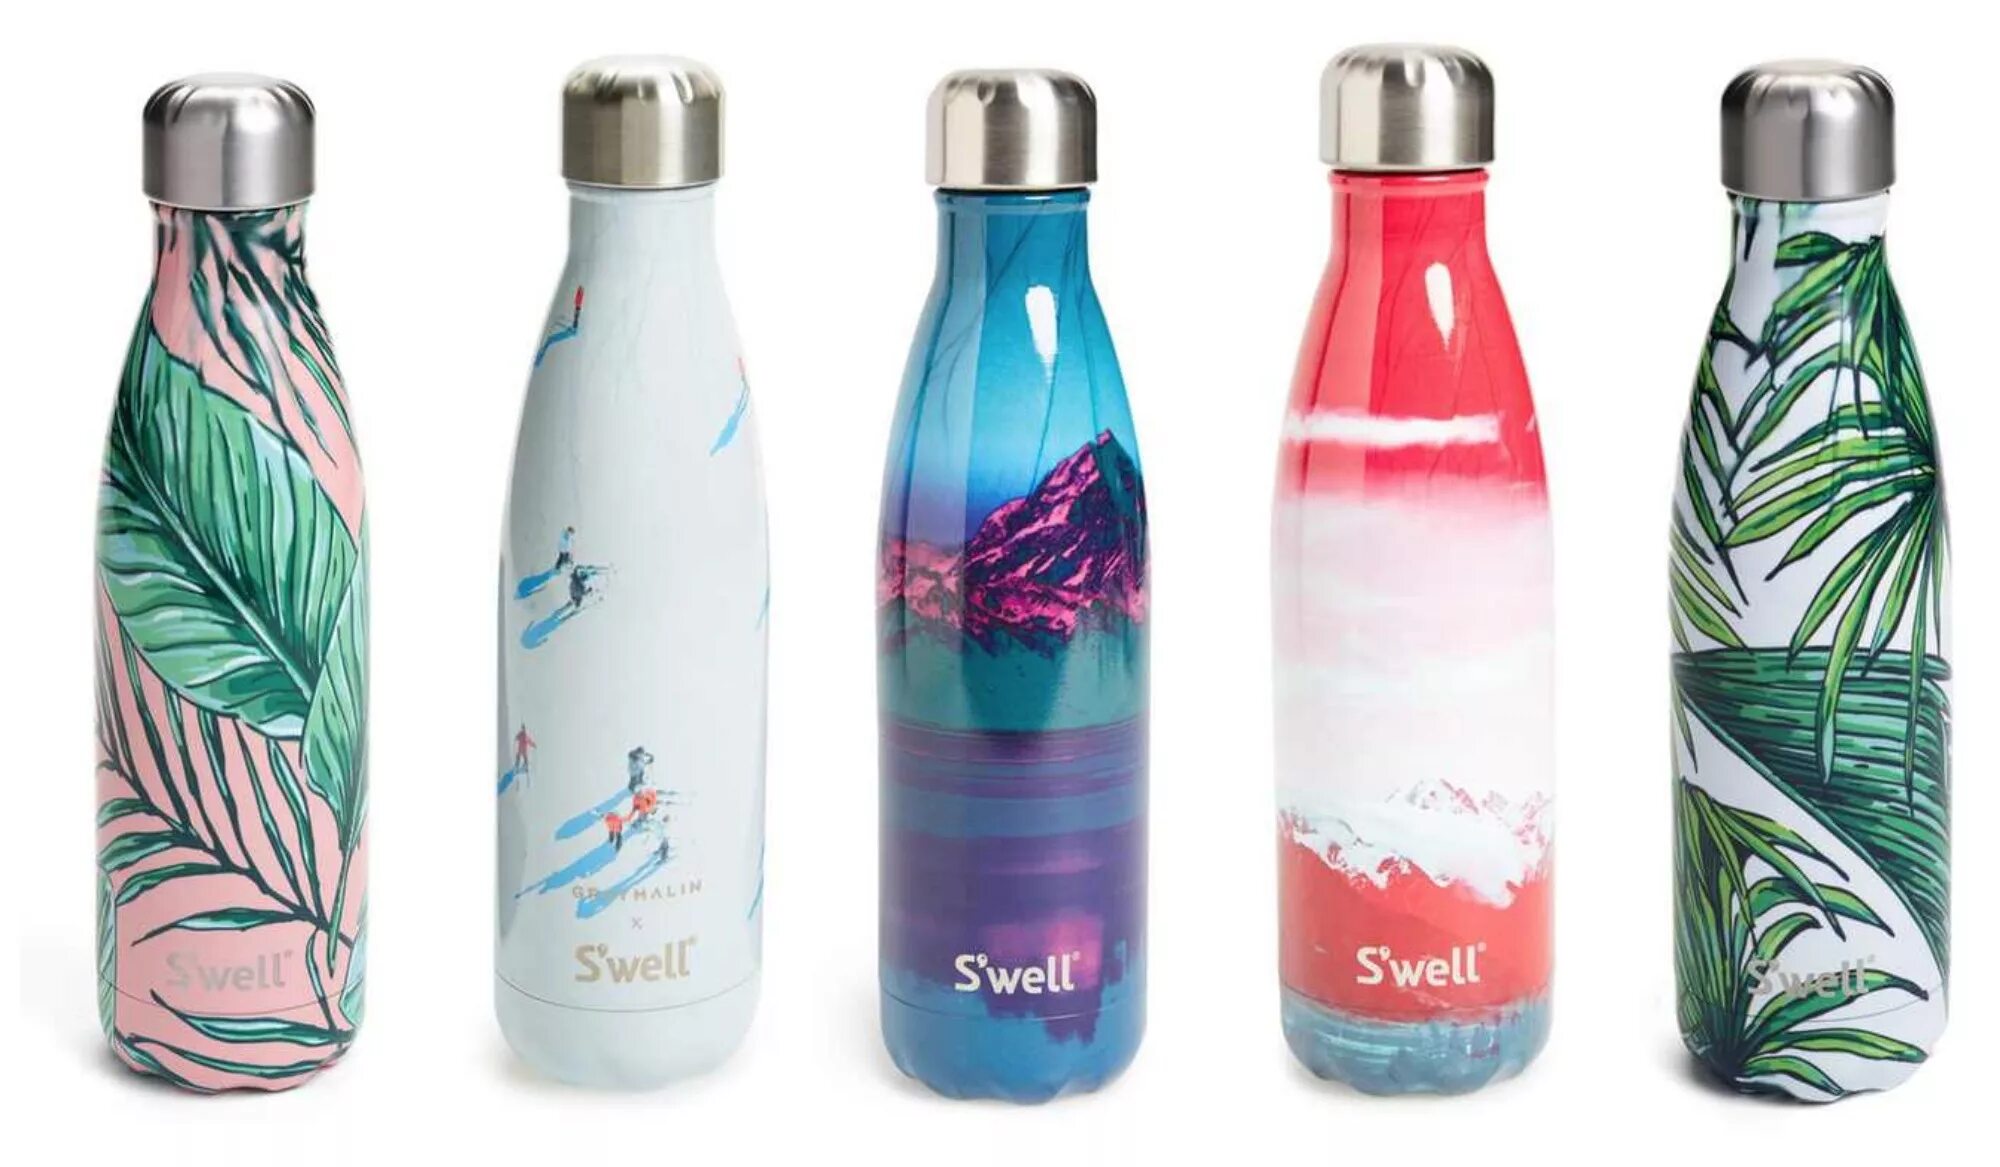 Бутылка Swell. Swell термос. Бутылка для воды Spirit. Сладкая вода в бутылках.